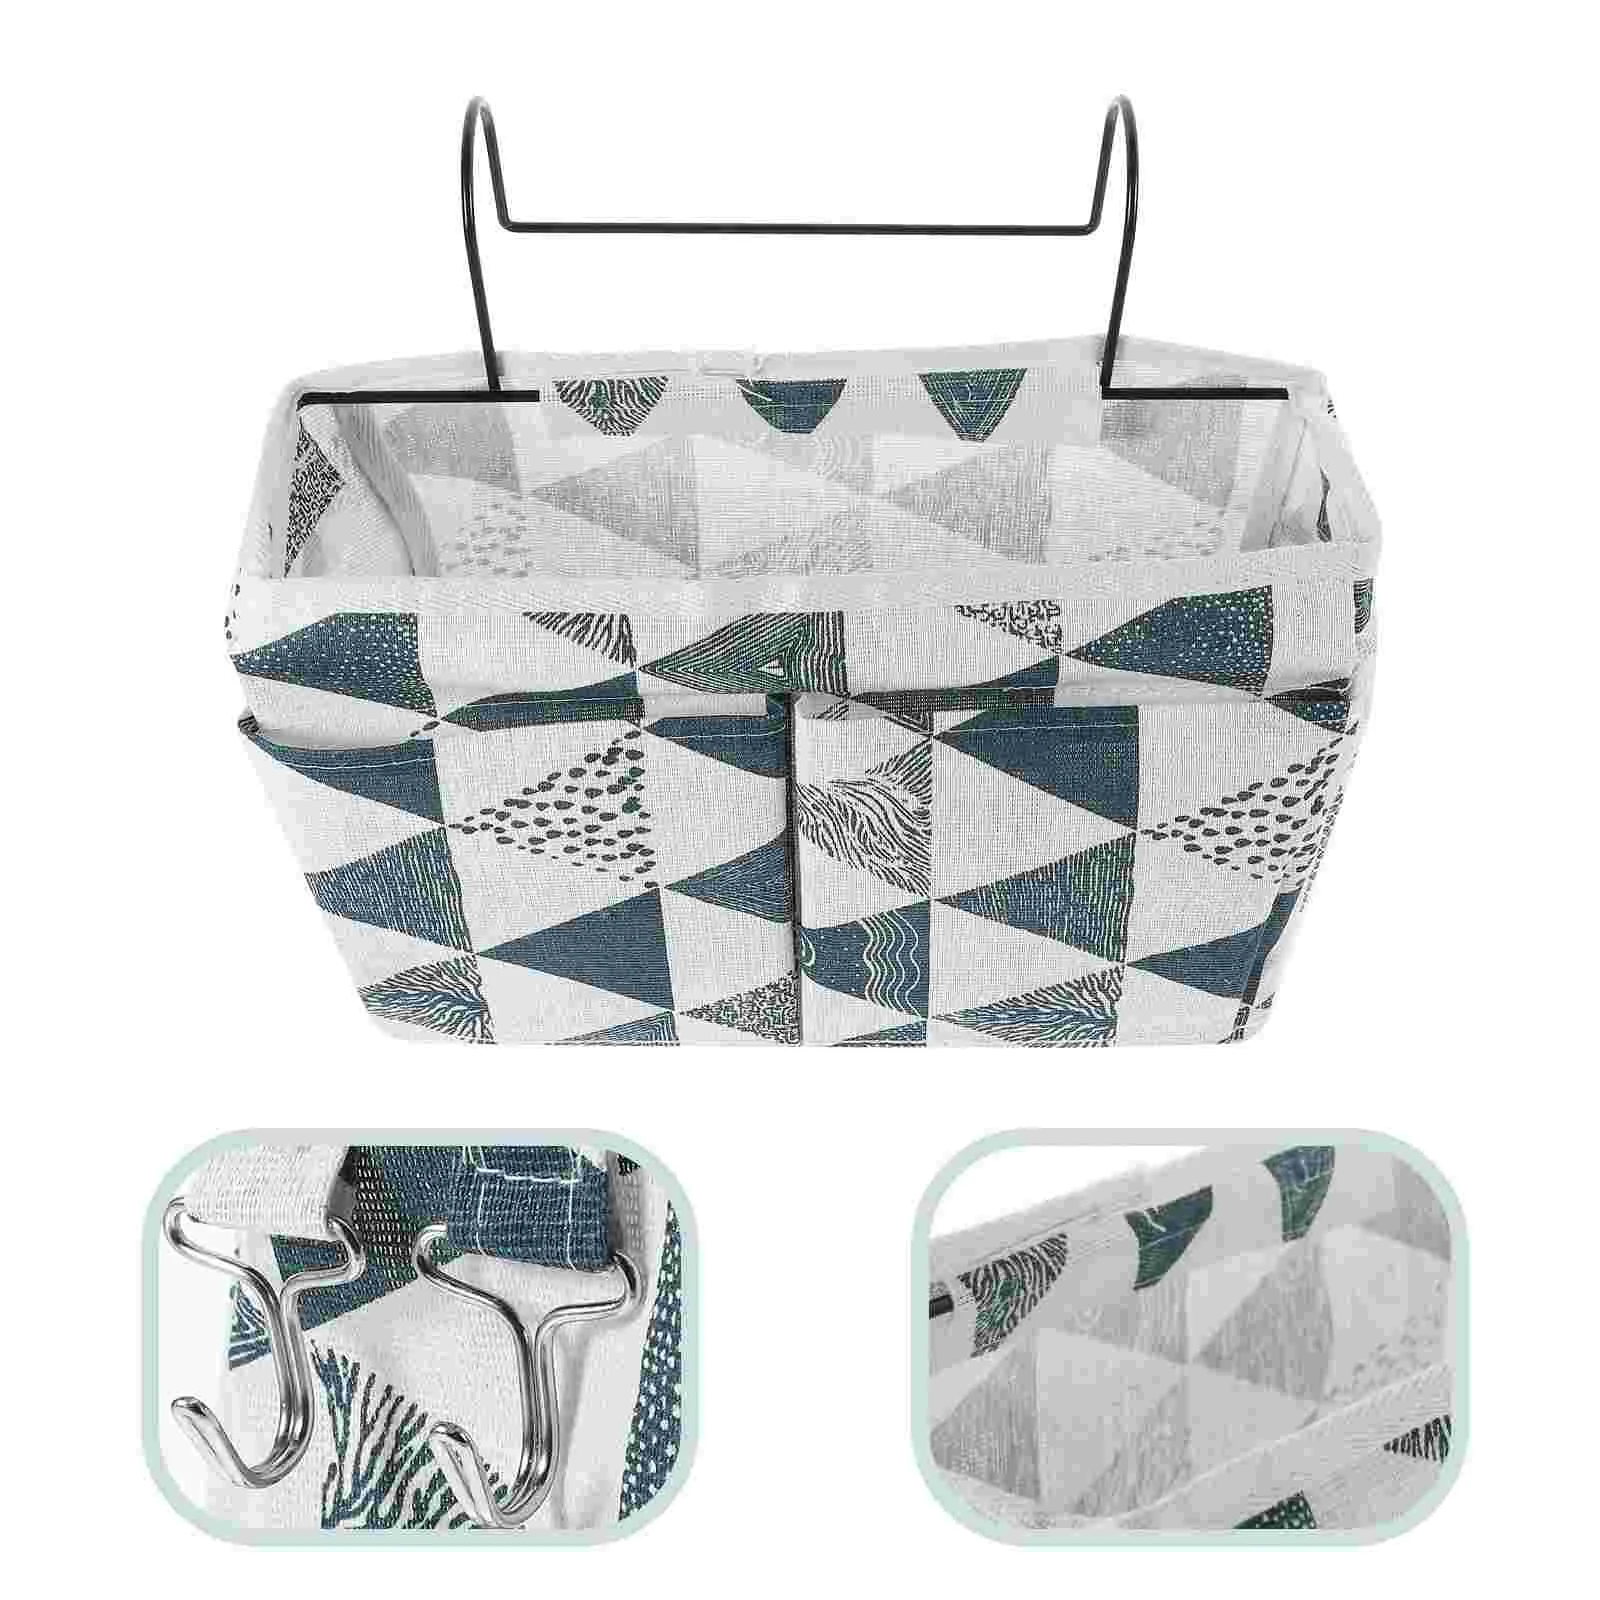 

Small Hanging Basket Baskets Organizing Wall Wall-mounted Storage Bag Organizer Pockets Bedside